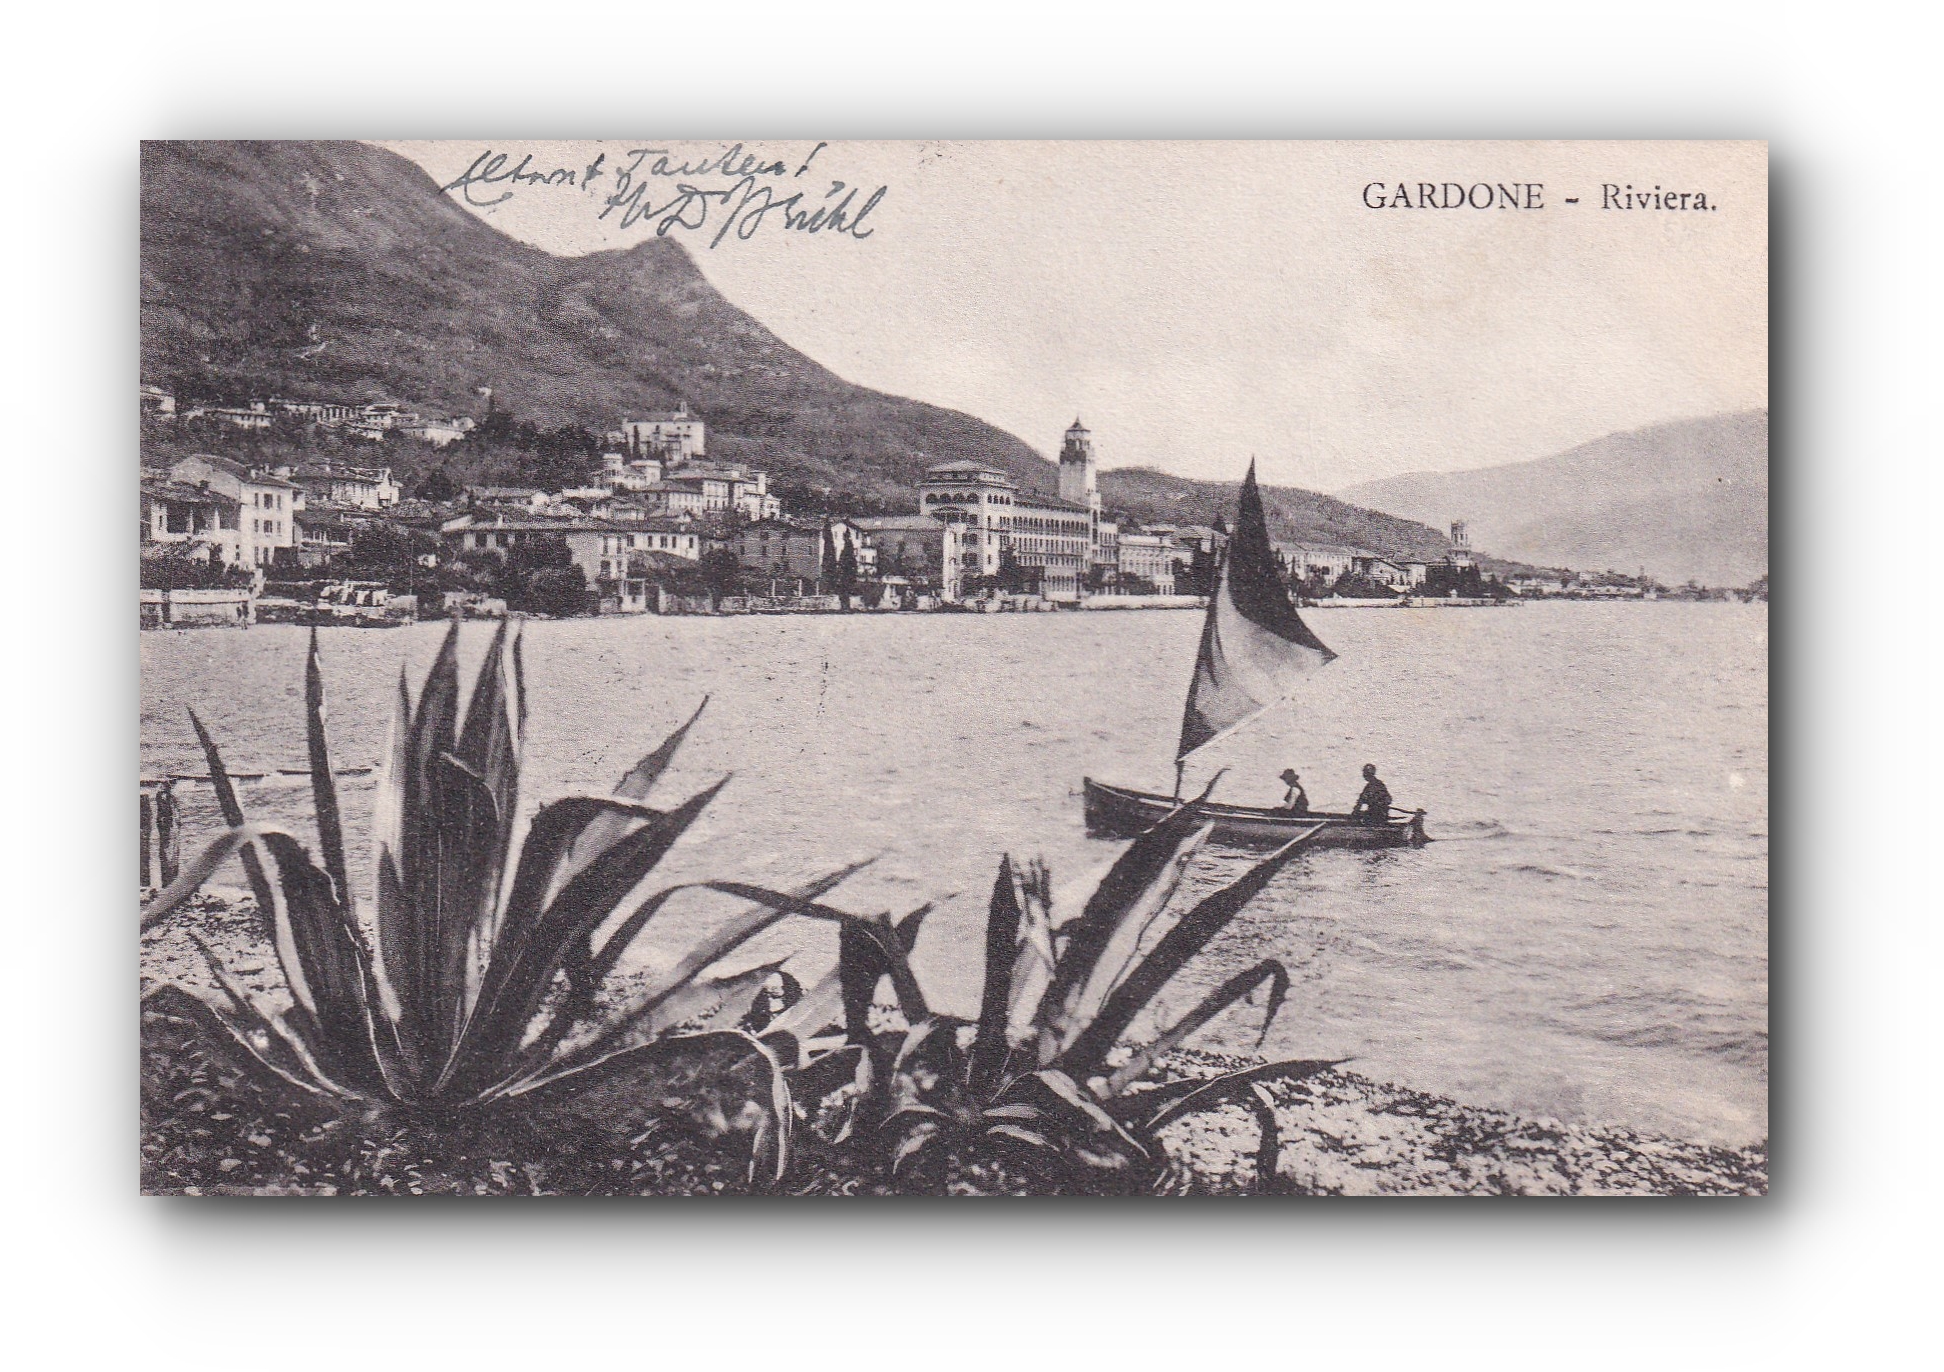 - Riviera - GARDONE - 06.10.1916 -